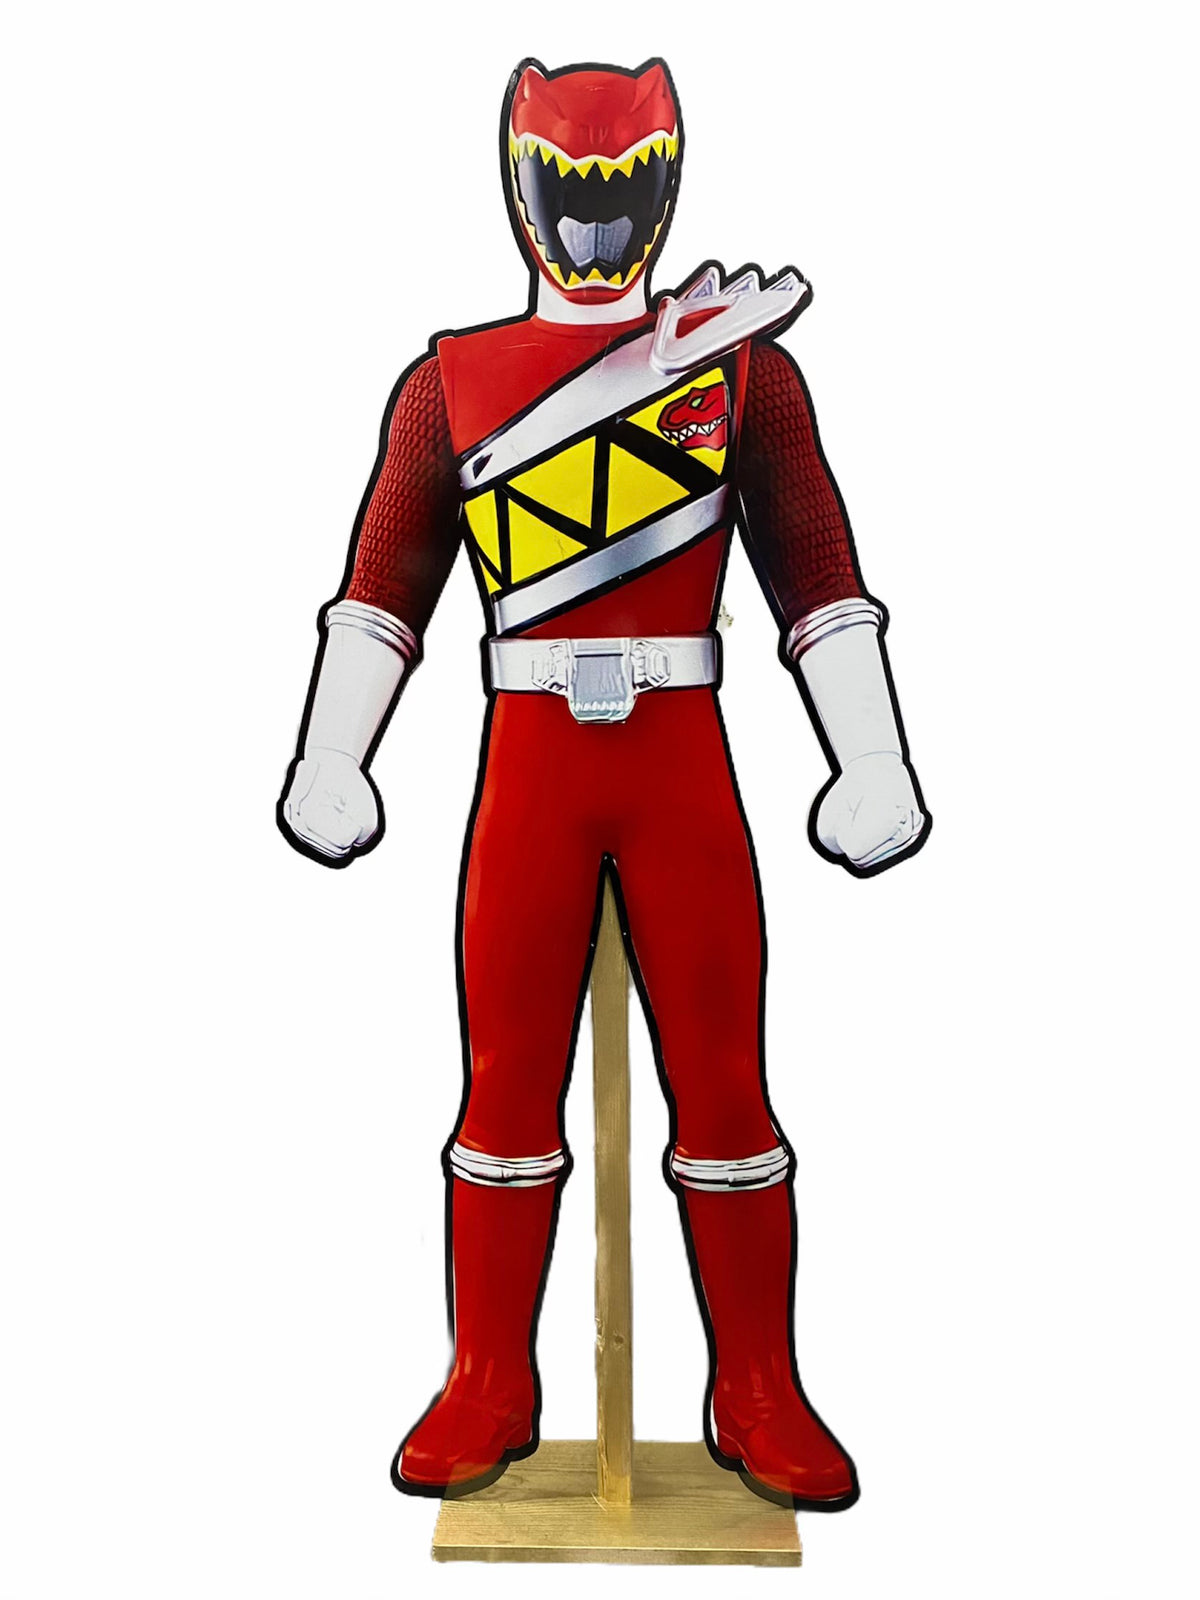 Red Power Ranger Standee